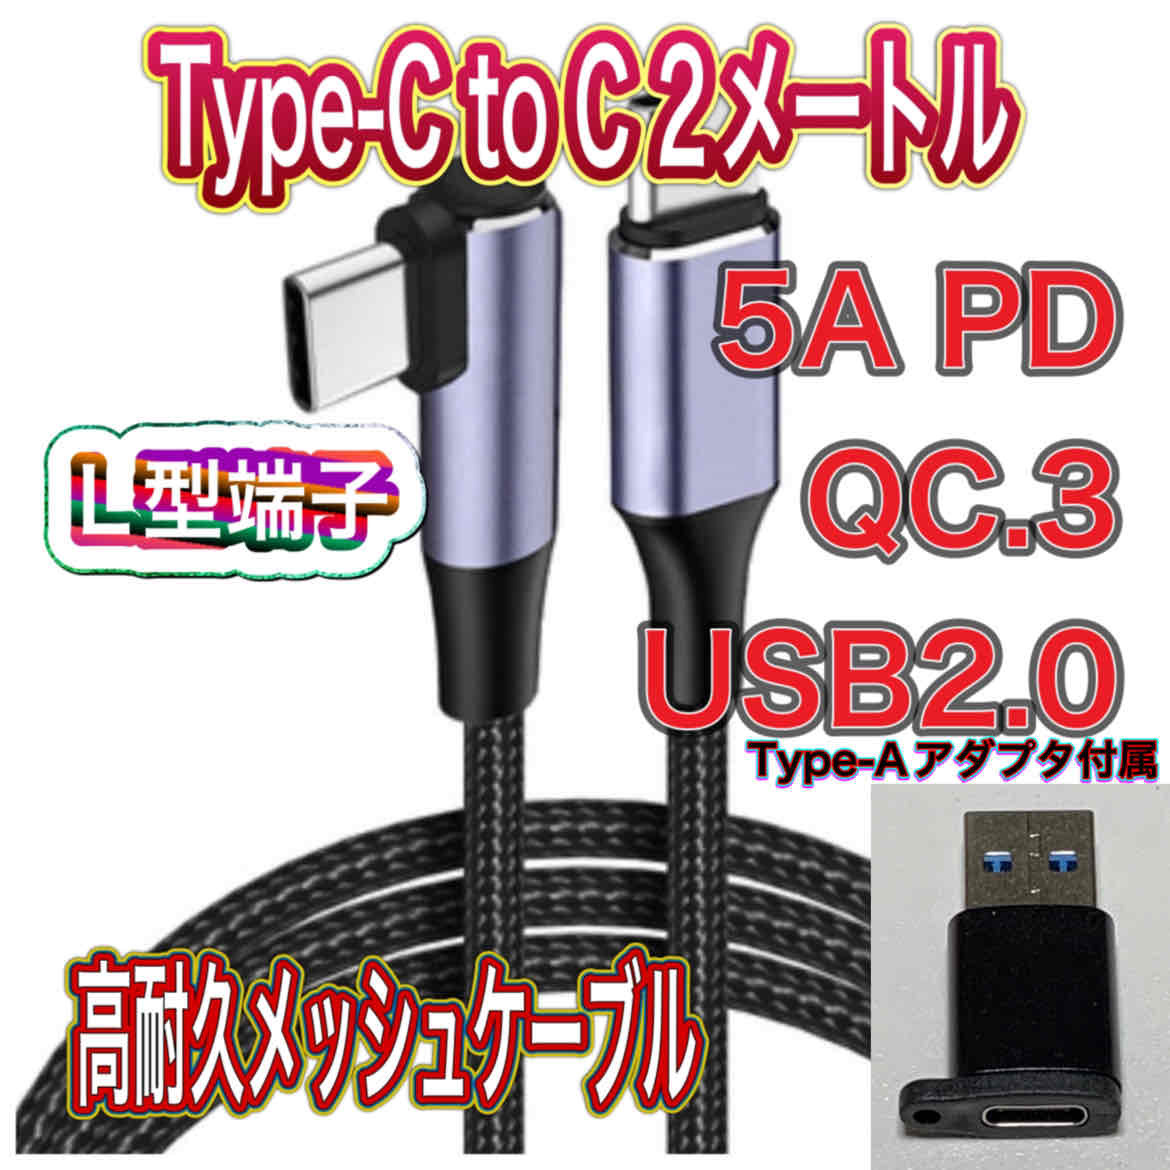 新品 Type-C to C 2メートル 100W5A PDケーブル QC.3 使いやすい片側 L型端子 TypeAアダプタ付き 高耐久メッシュケーブル 送料無料の画像1